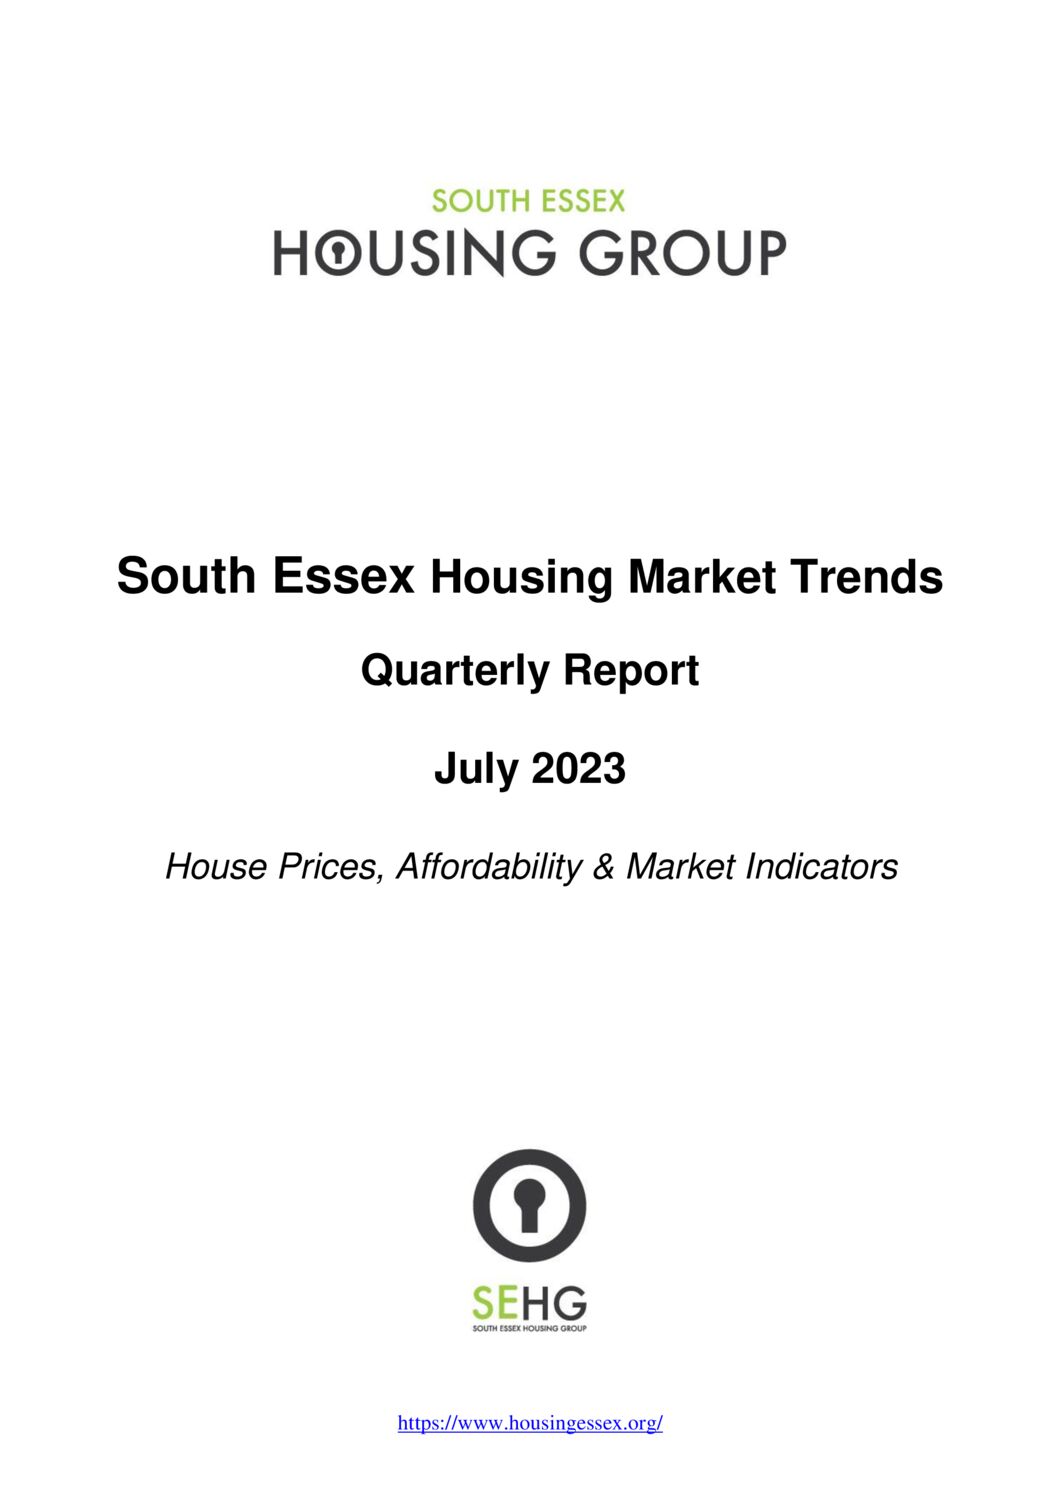 South Essex Housing Market Trends Report July 2023